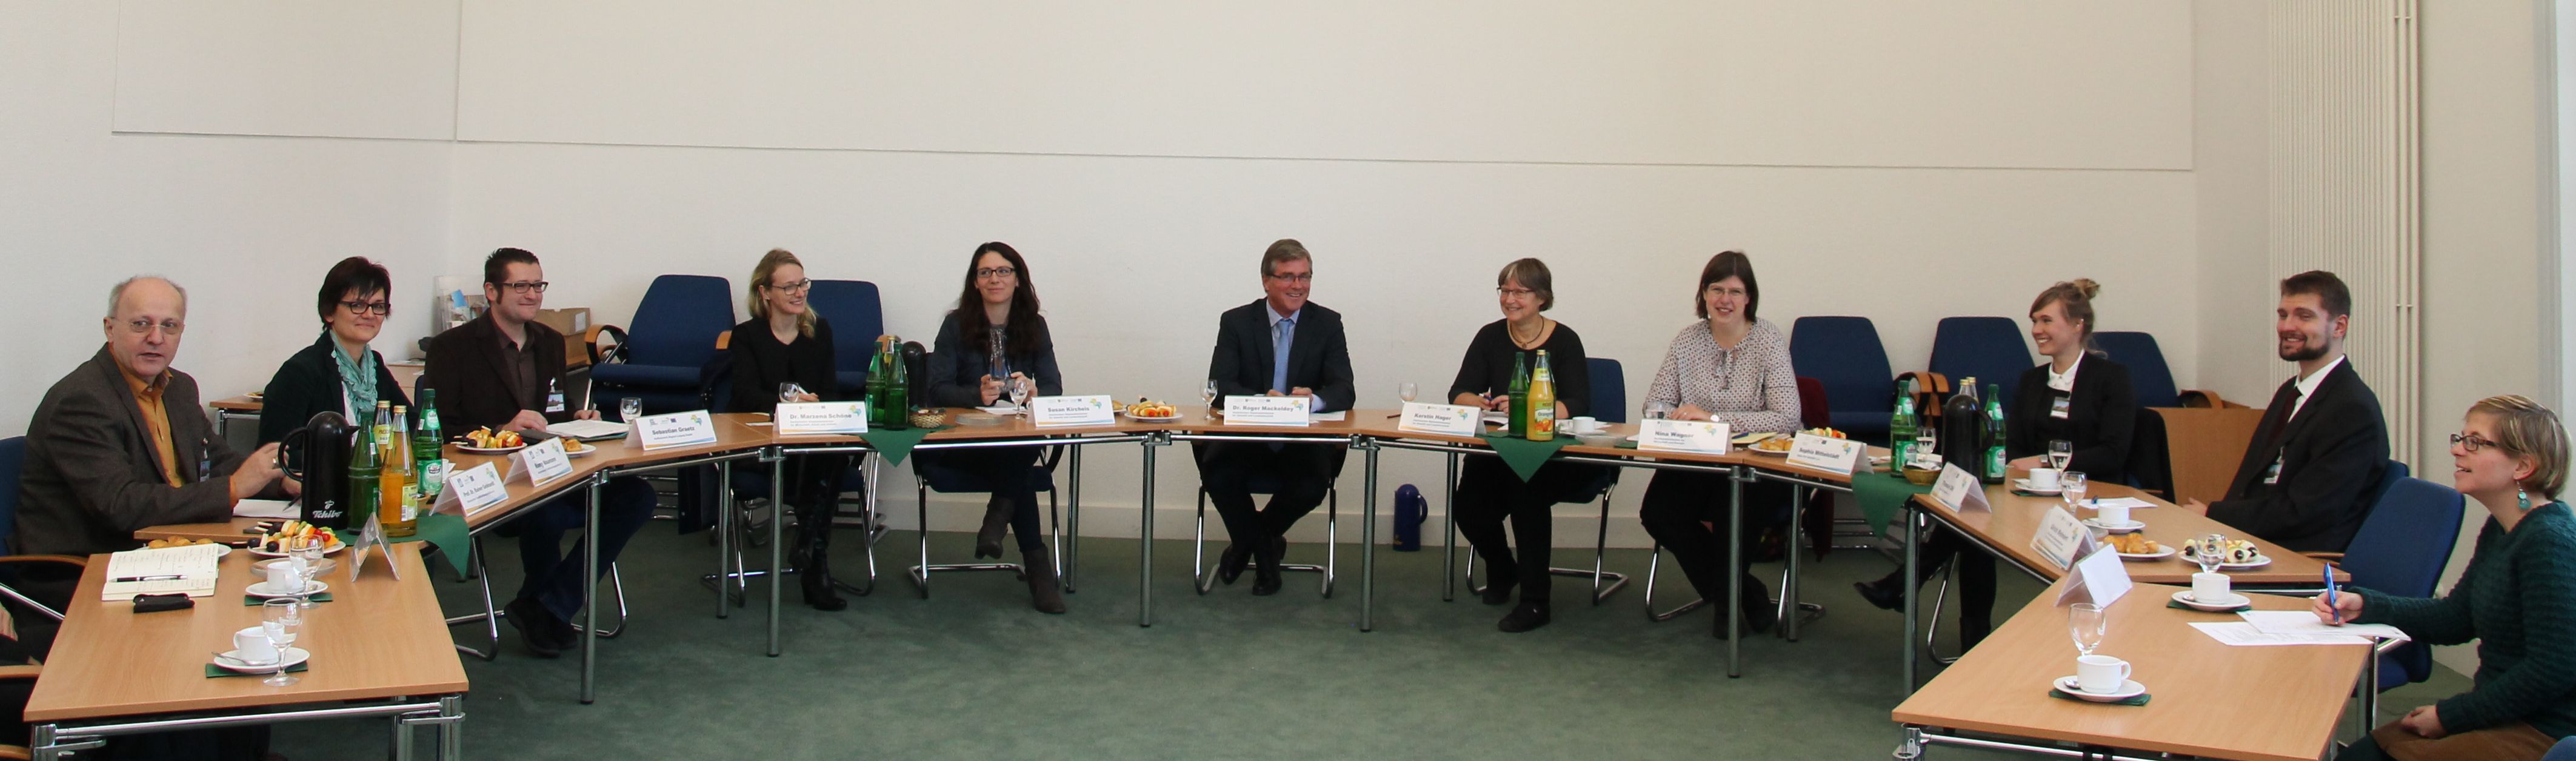 Saxony-meeting of Interreg Europe proj. partners 